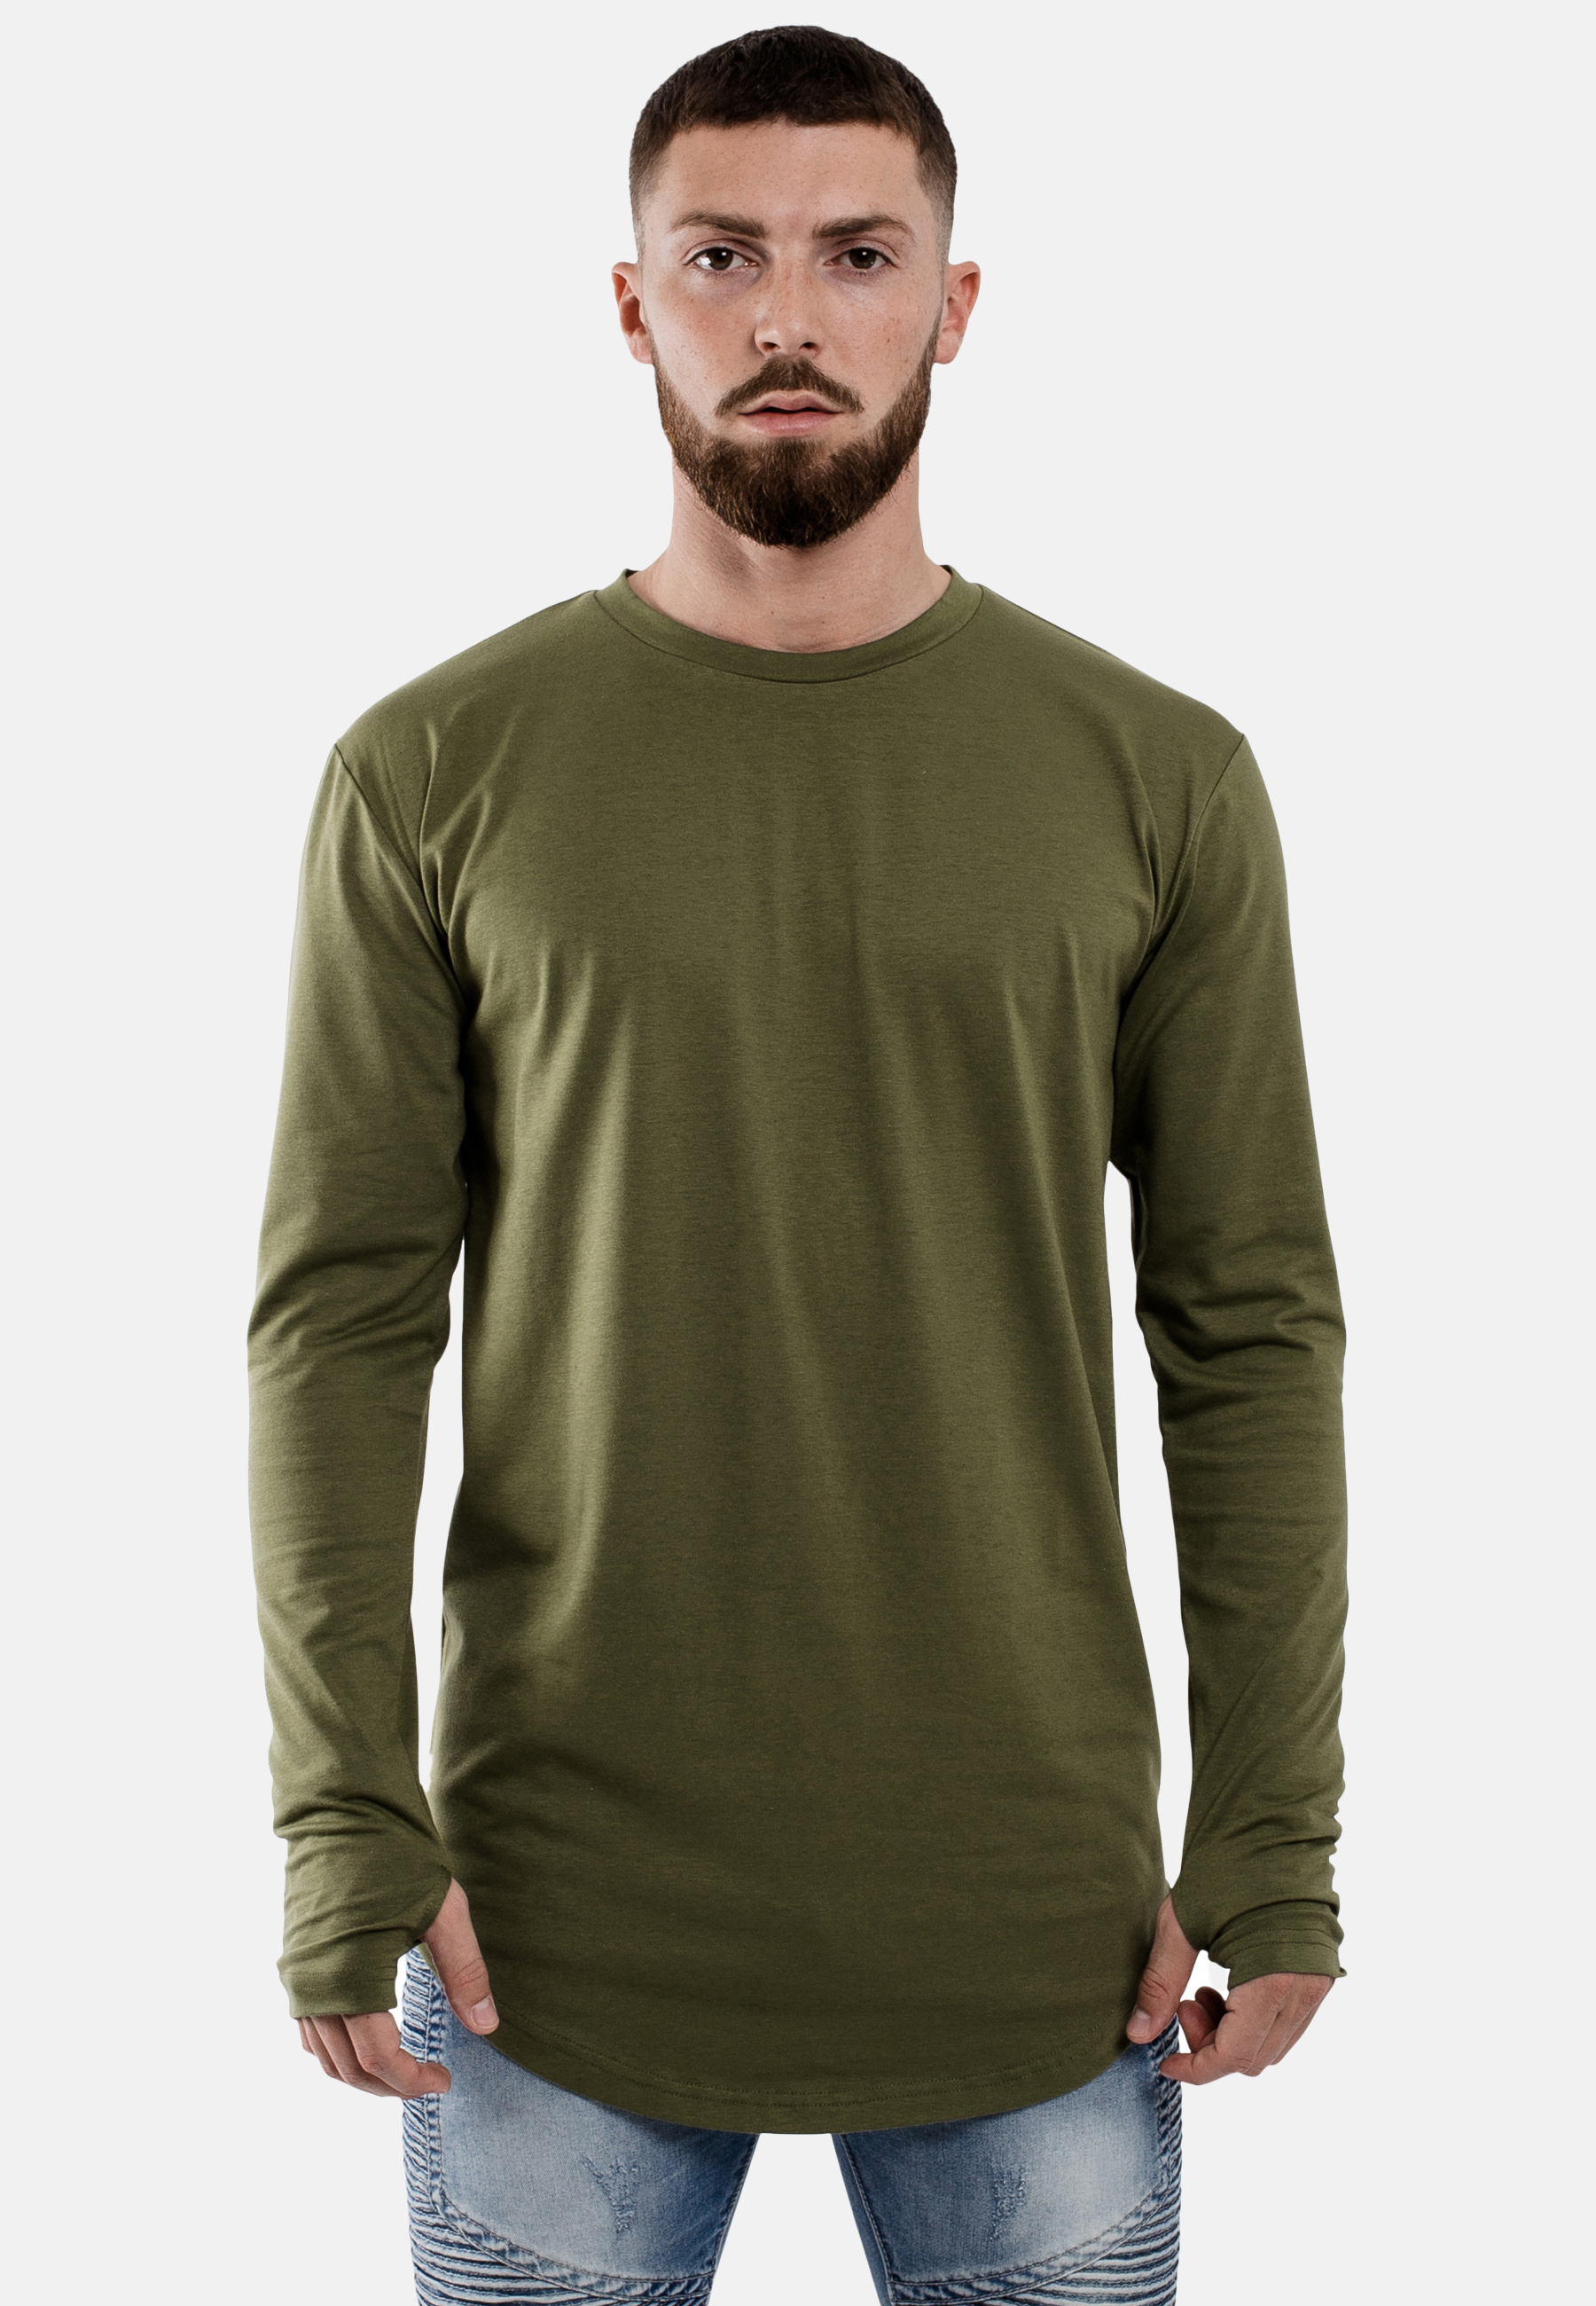 Round Long Sleeve Longline T-Shirt Olive - Blackskies Online Shop ...